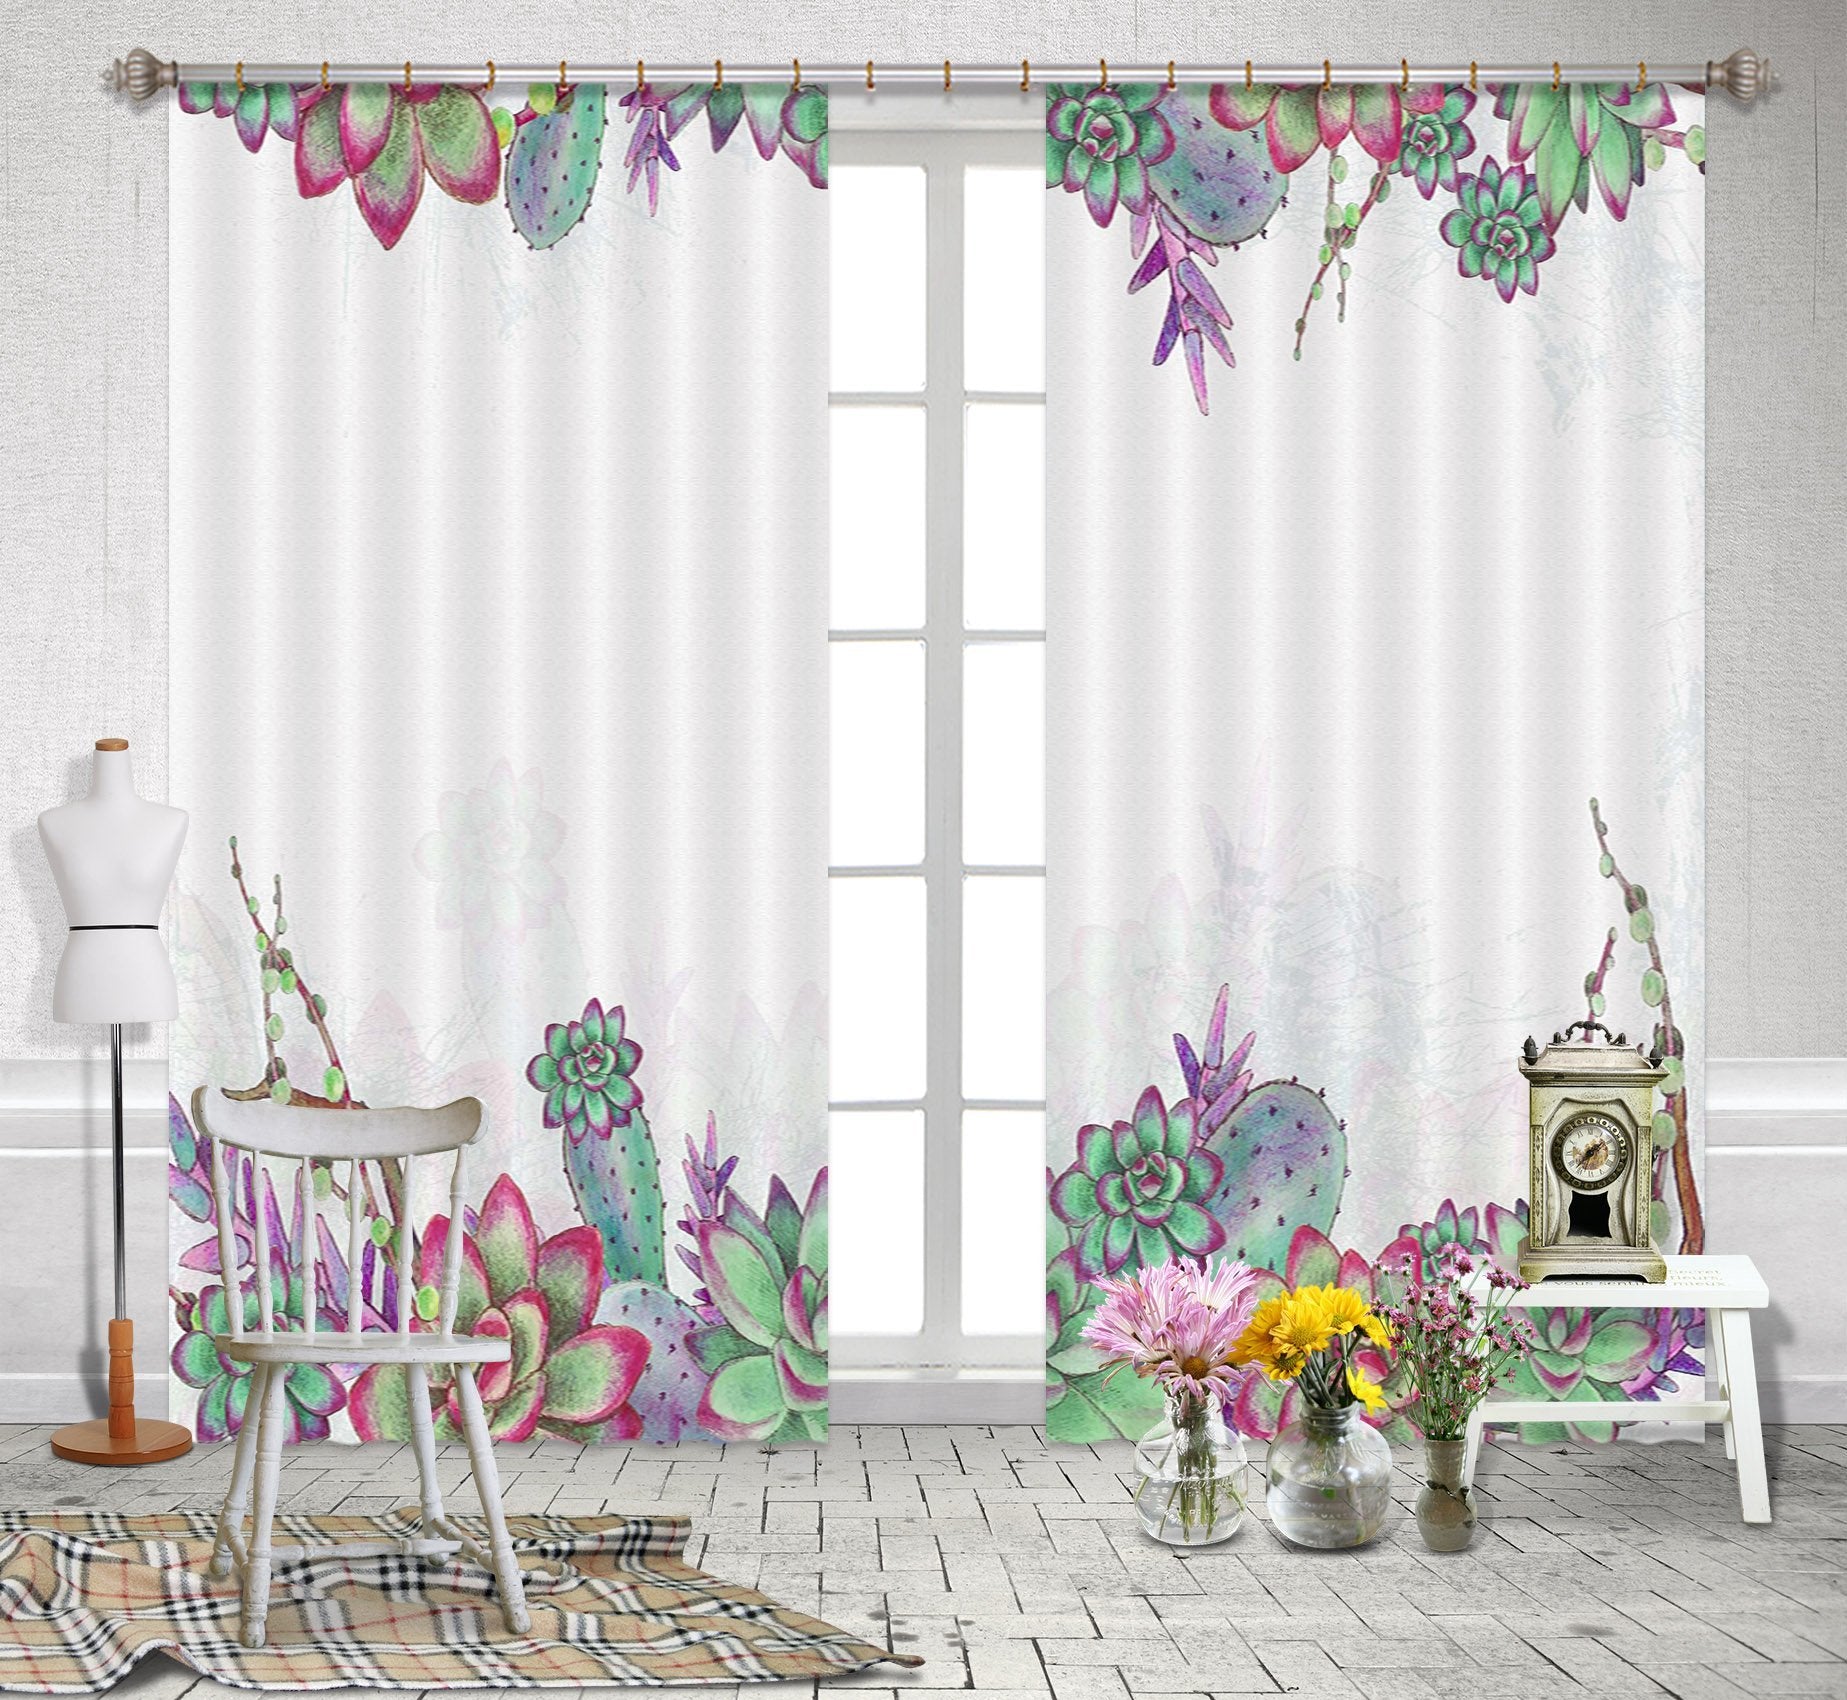 3D Succulent Plants 2435 Curtains Drapes Wallpaper AJ Wallpaper 